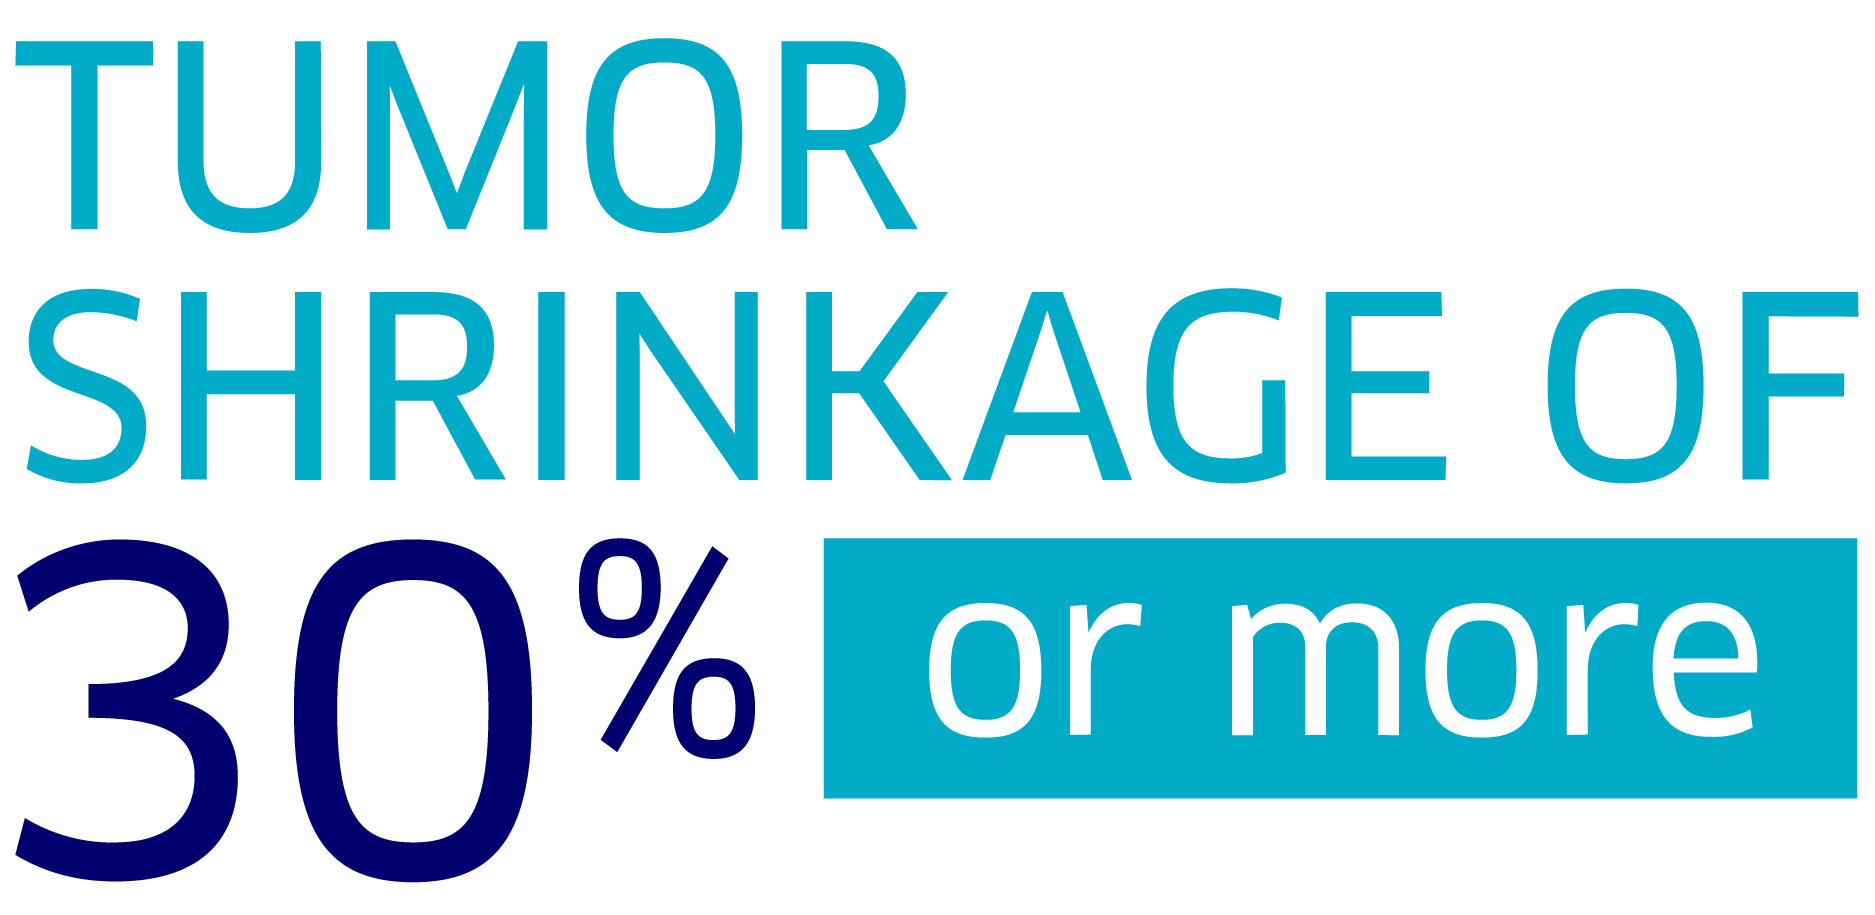 Tumor shrinkage of 30% or more